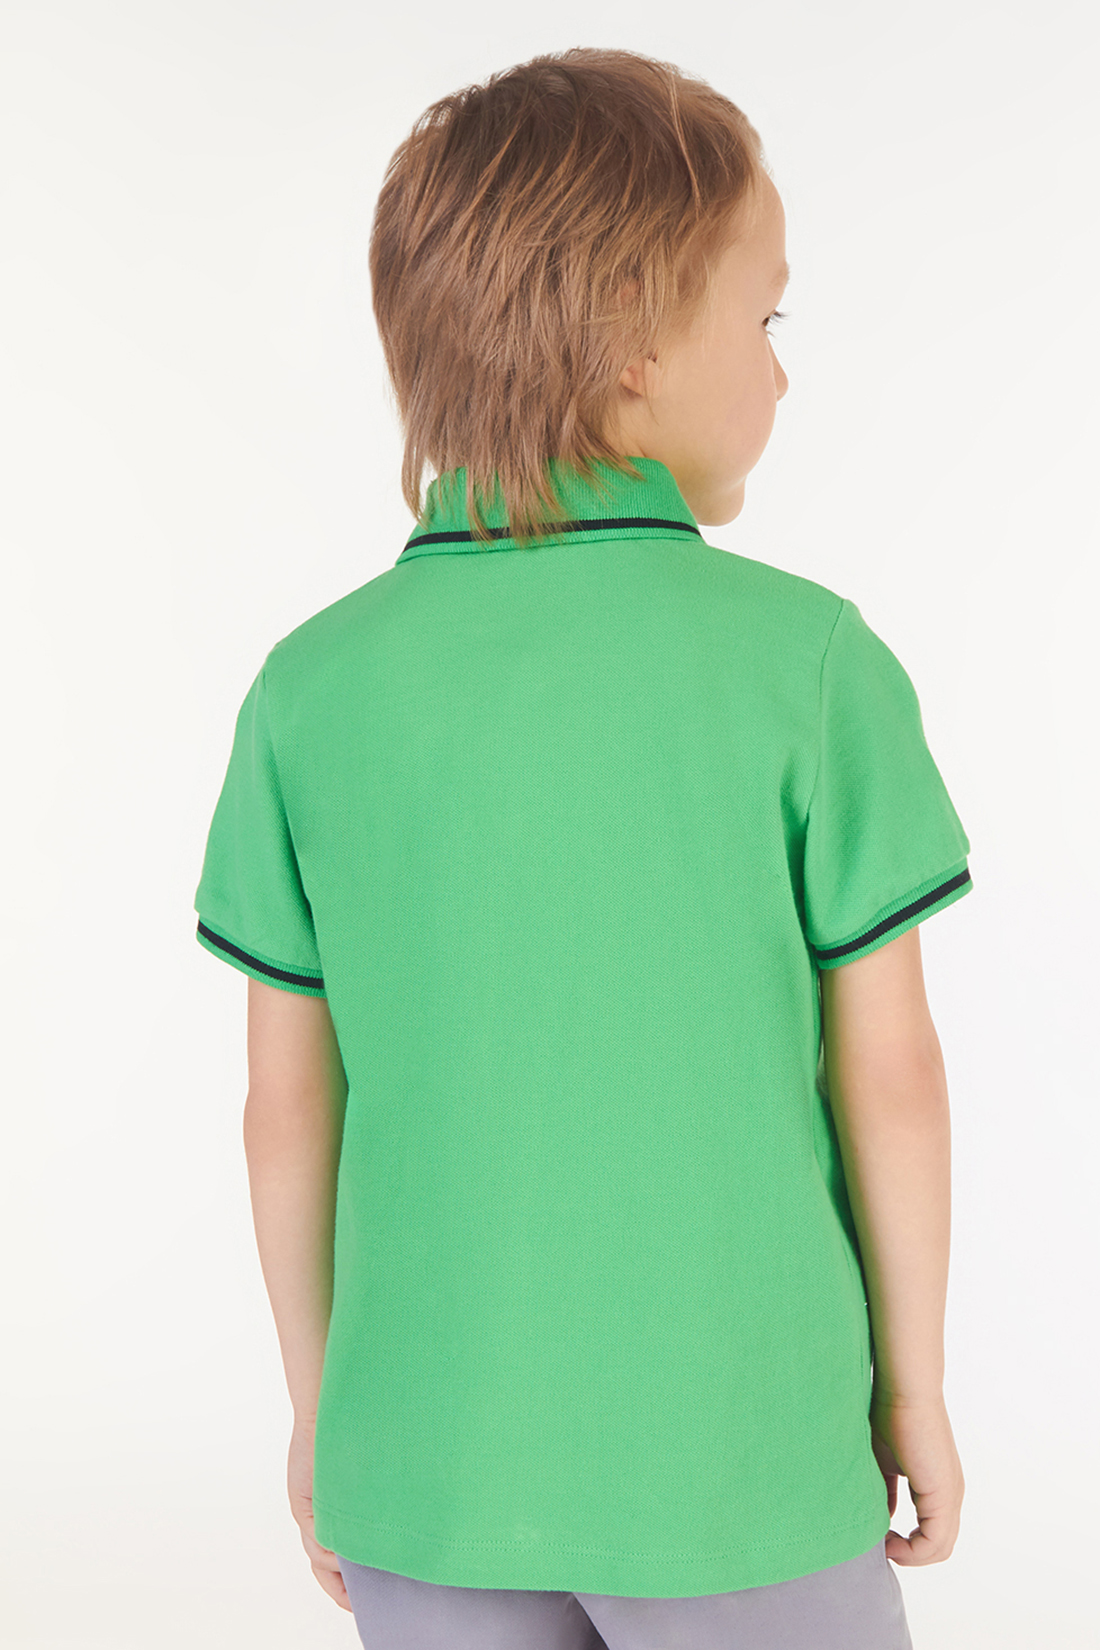 Поло для мальчика (арт. baon BK708002), размер 98-104, цвет зеленый Поло для мальчика (арт. baon BK708002) - фото 2